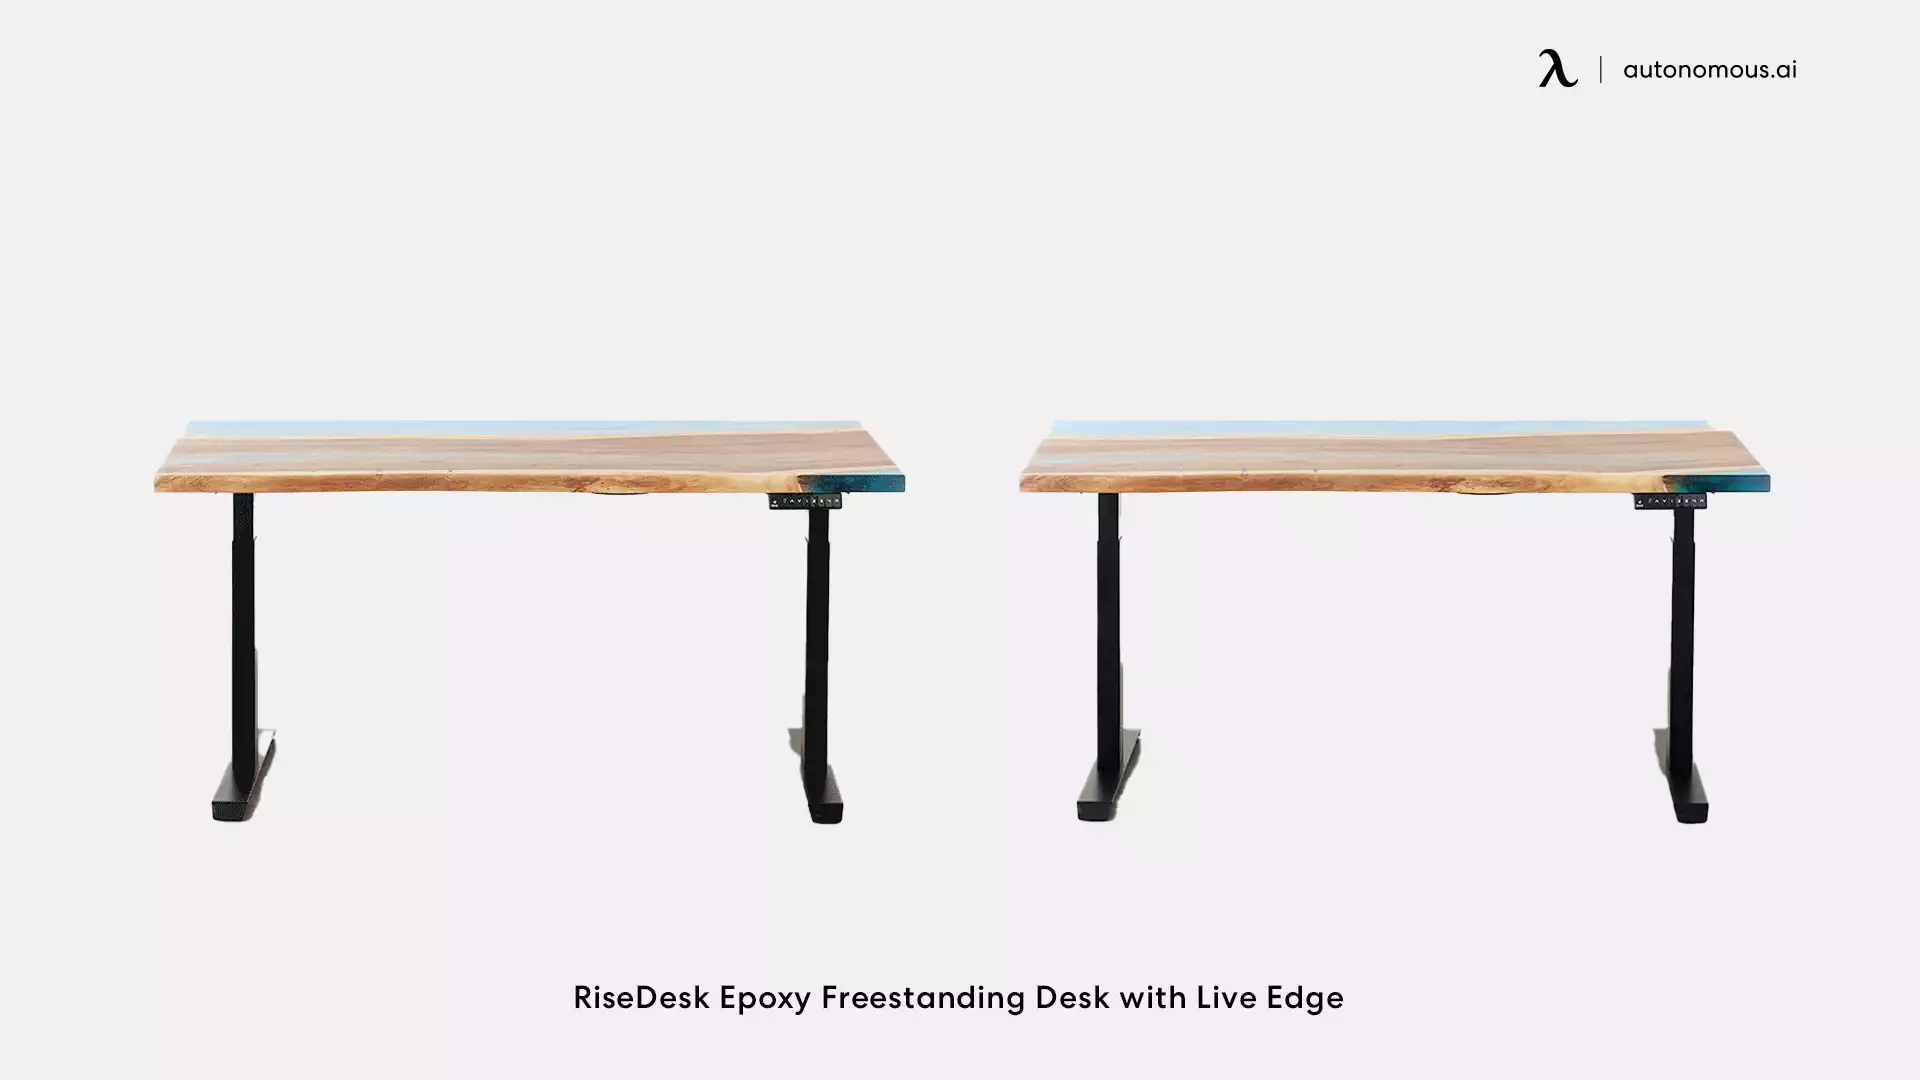 RiseDesk Epoxy Freestanding Desk with Live Edge